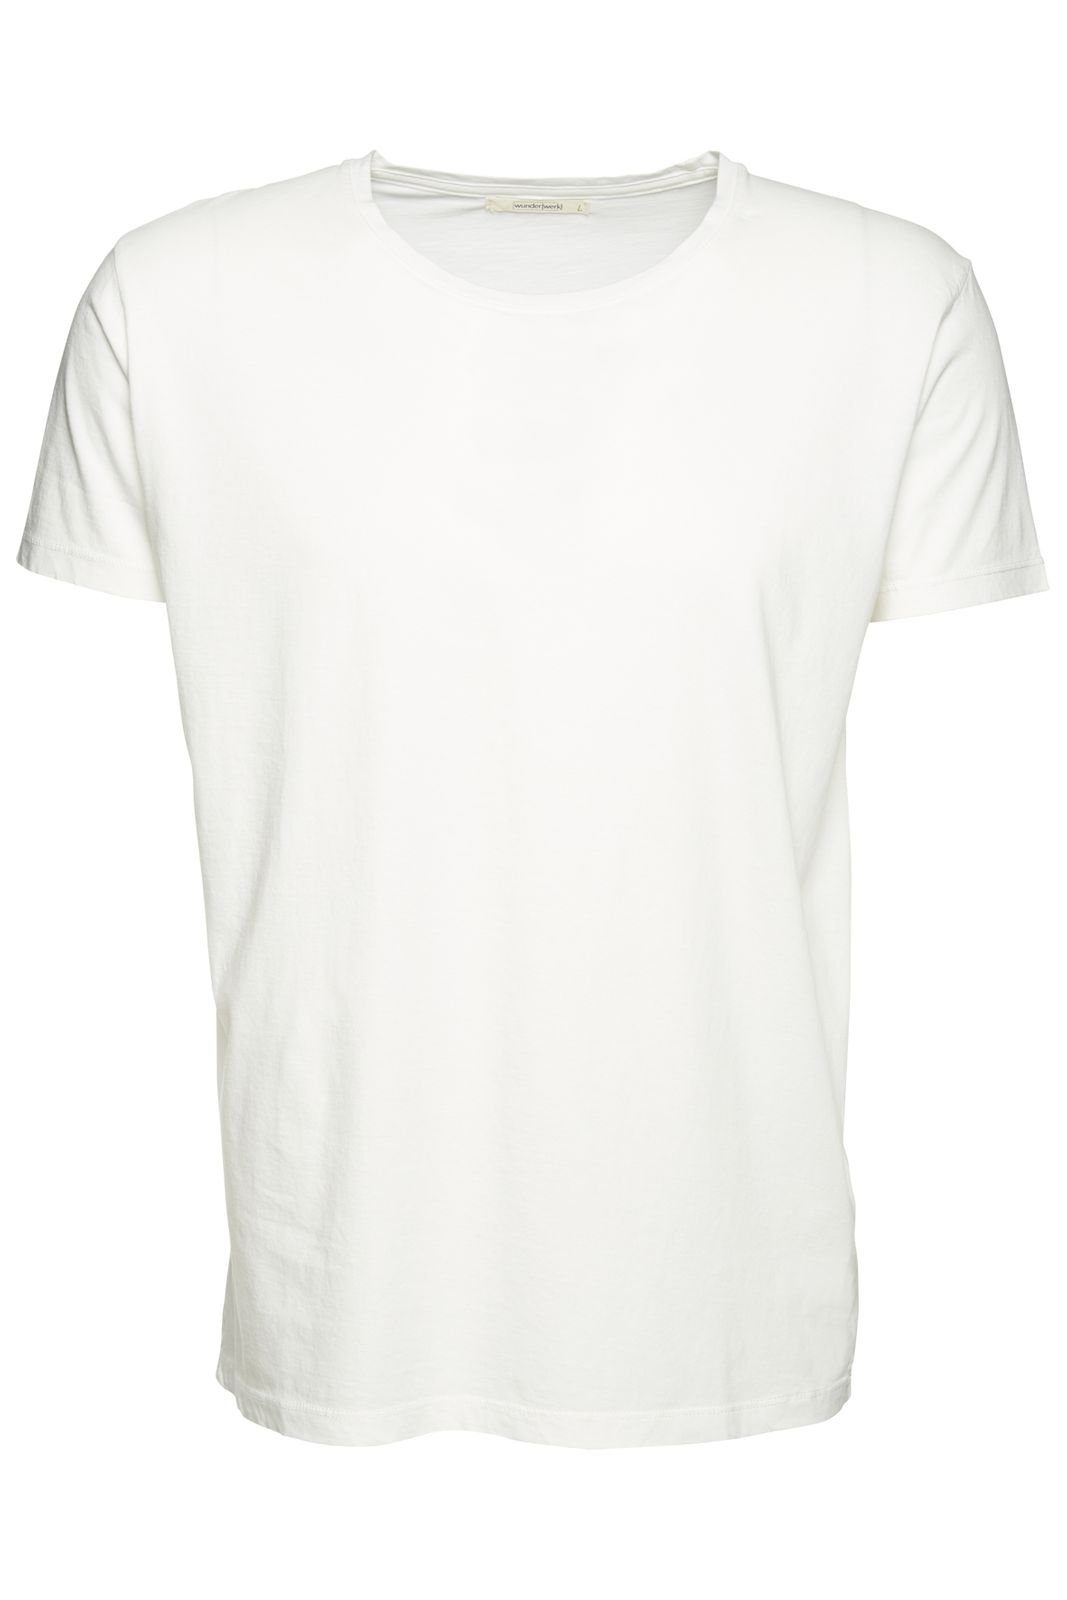 wunderwerk T-Shirt Core Tee mal white - 100 tinto male